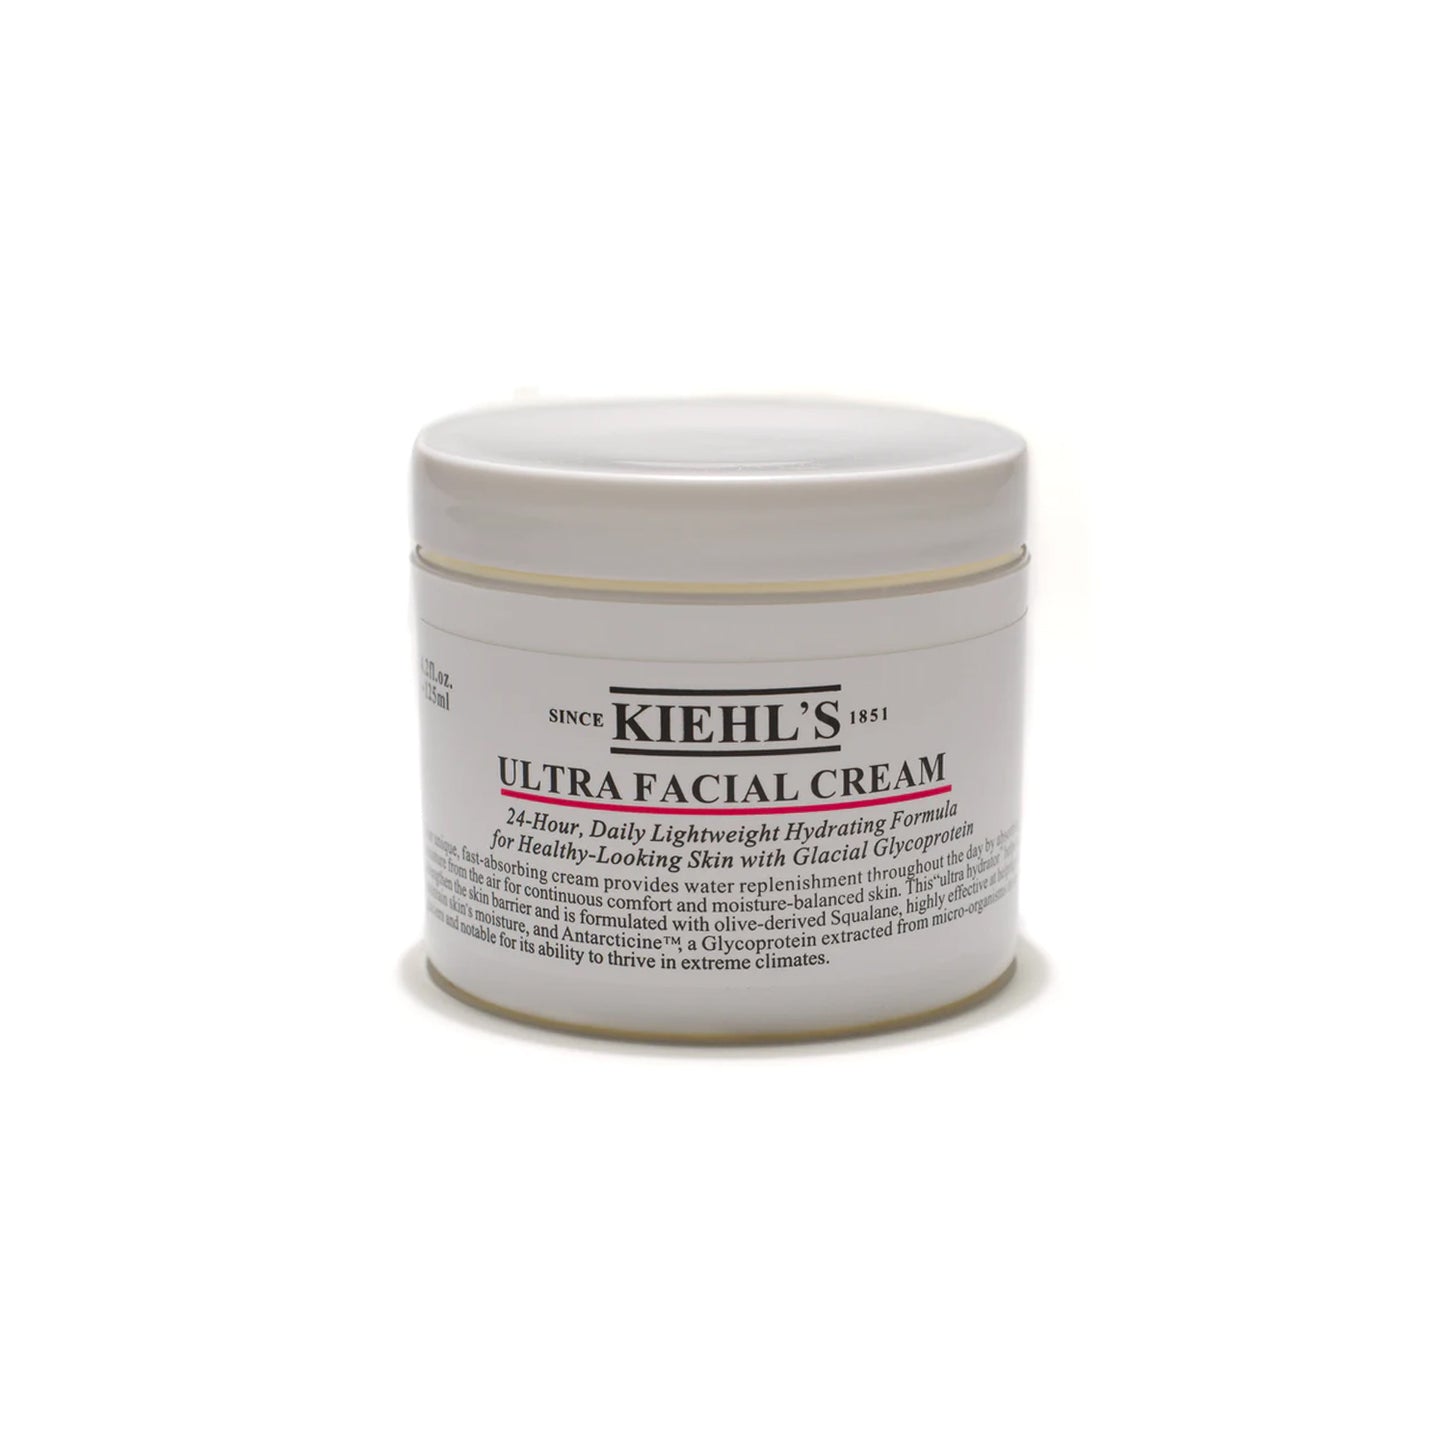 Kiehl's Ultra Facial Cream 125 ml Jar Original